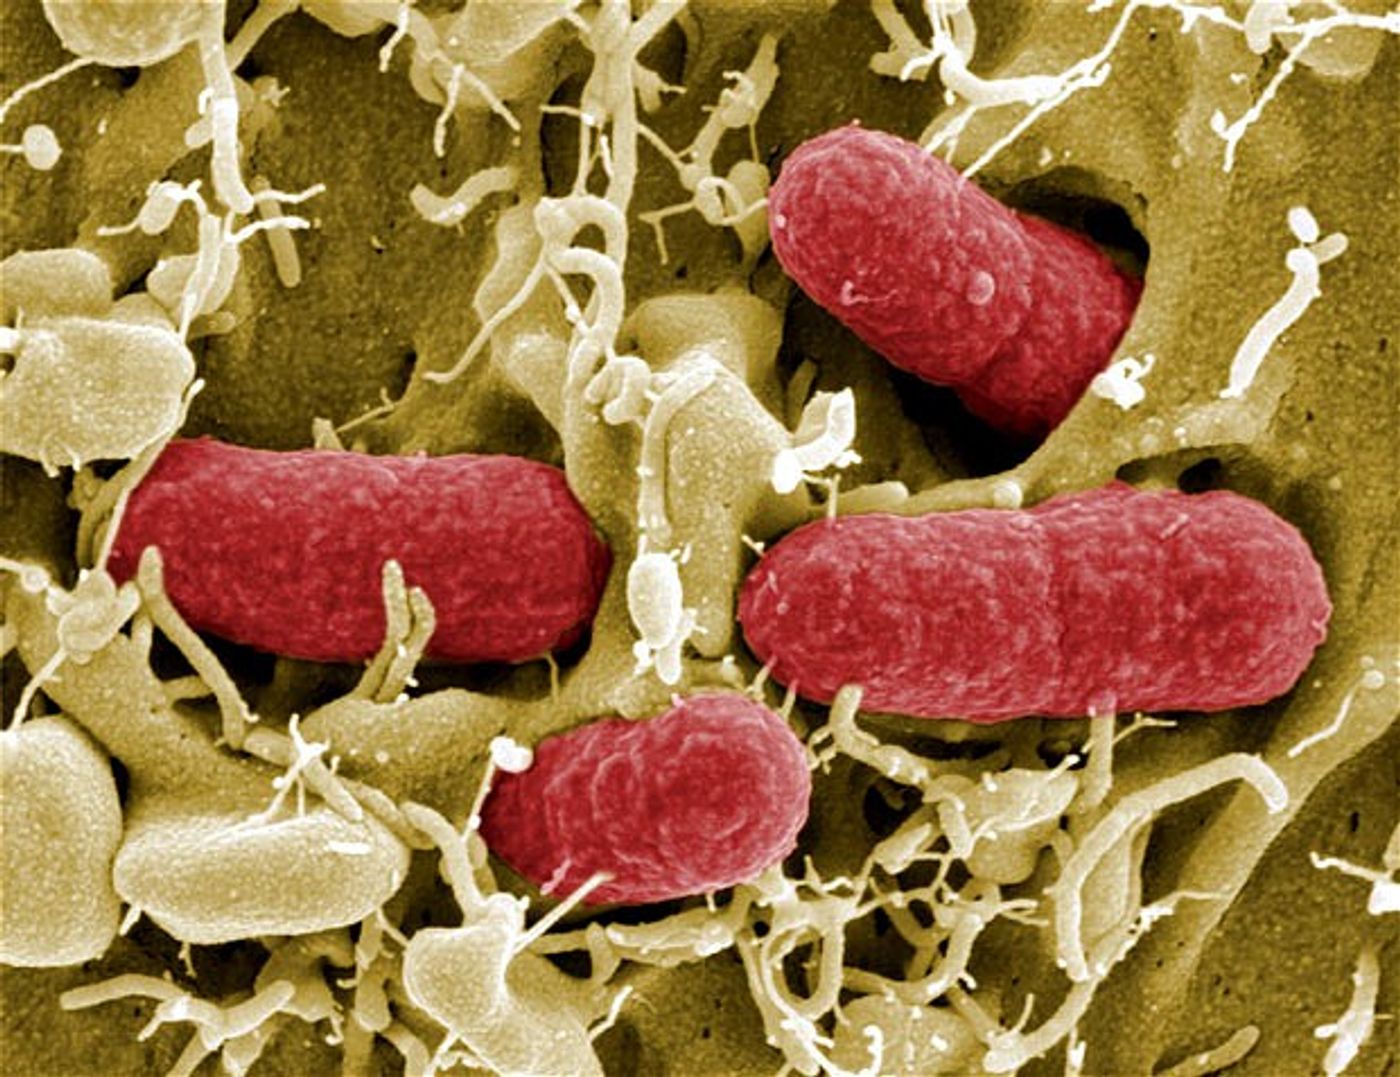 Electron microscopy image of E.coli